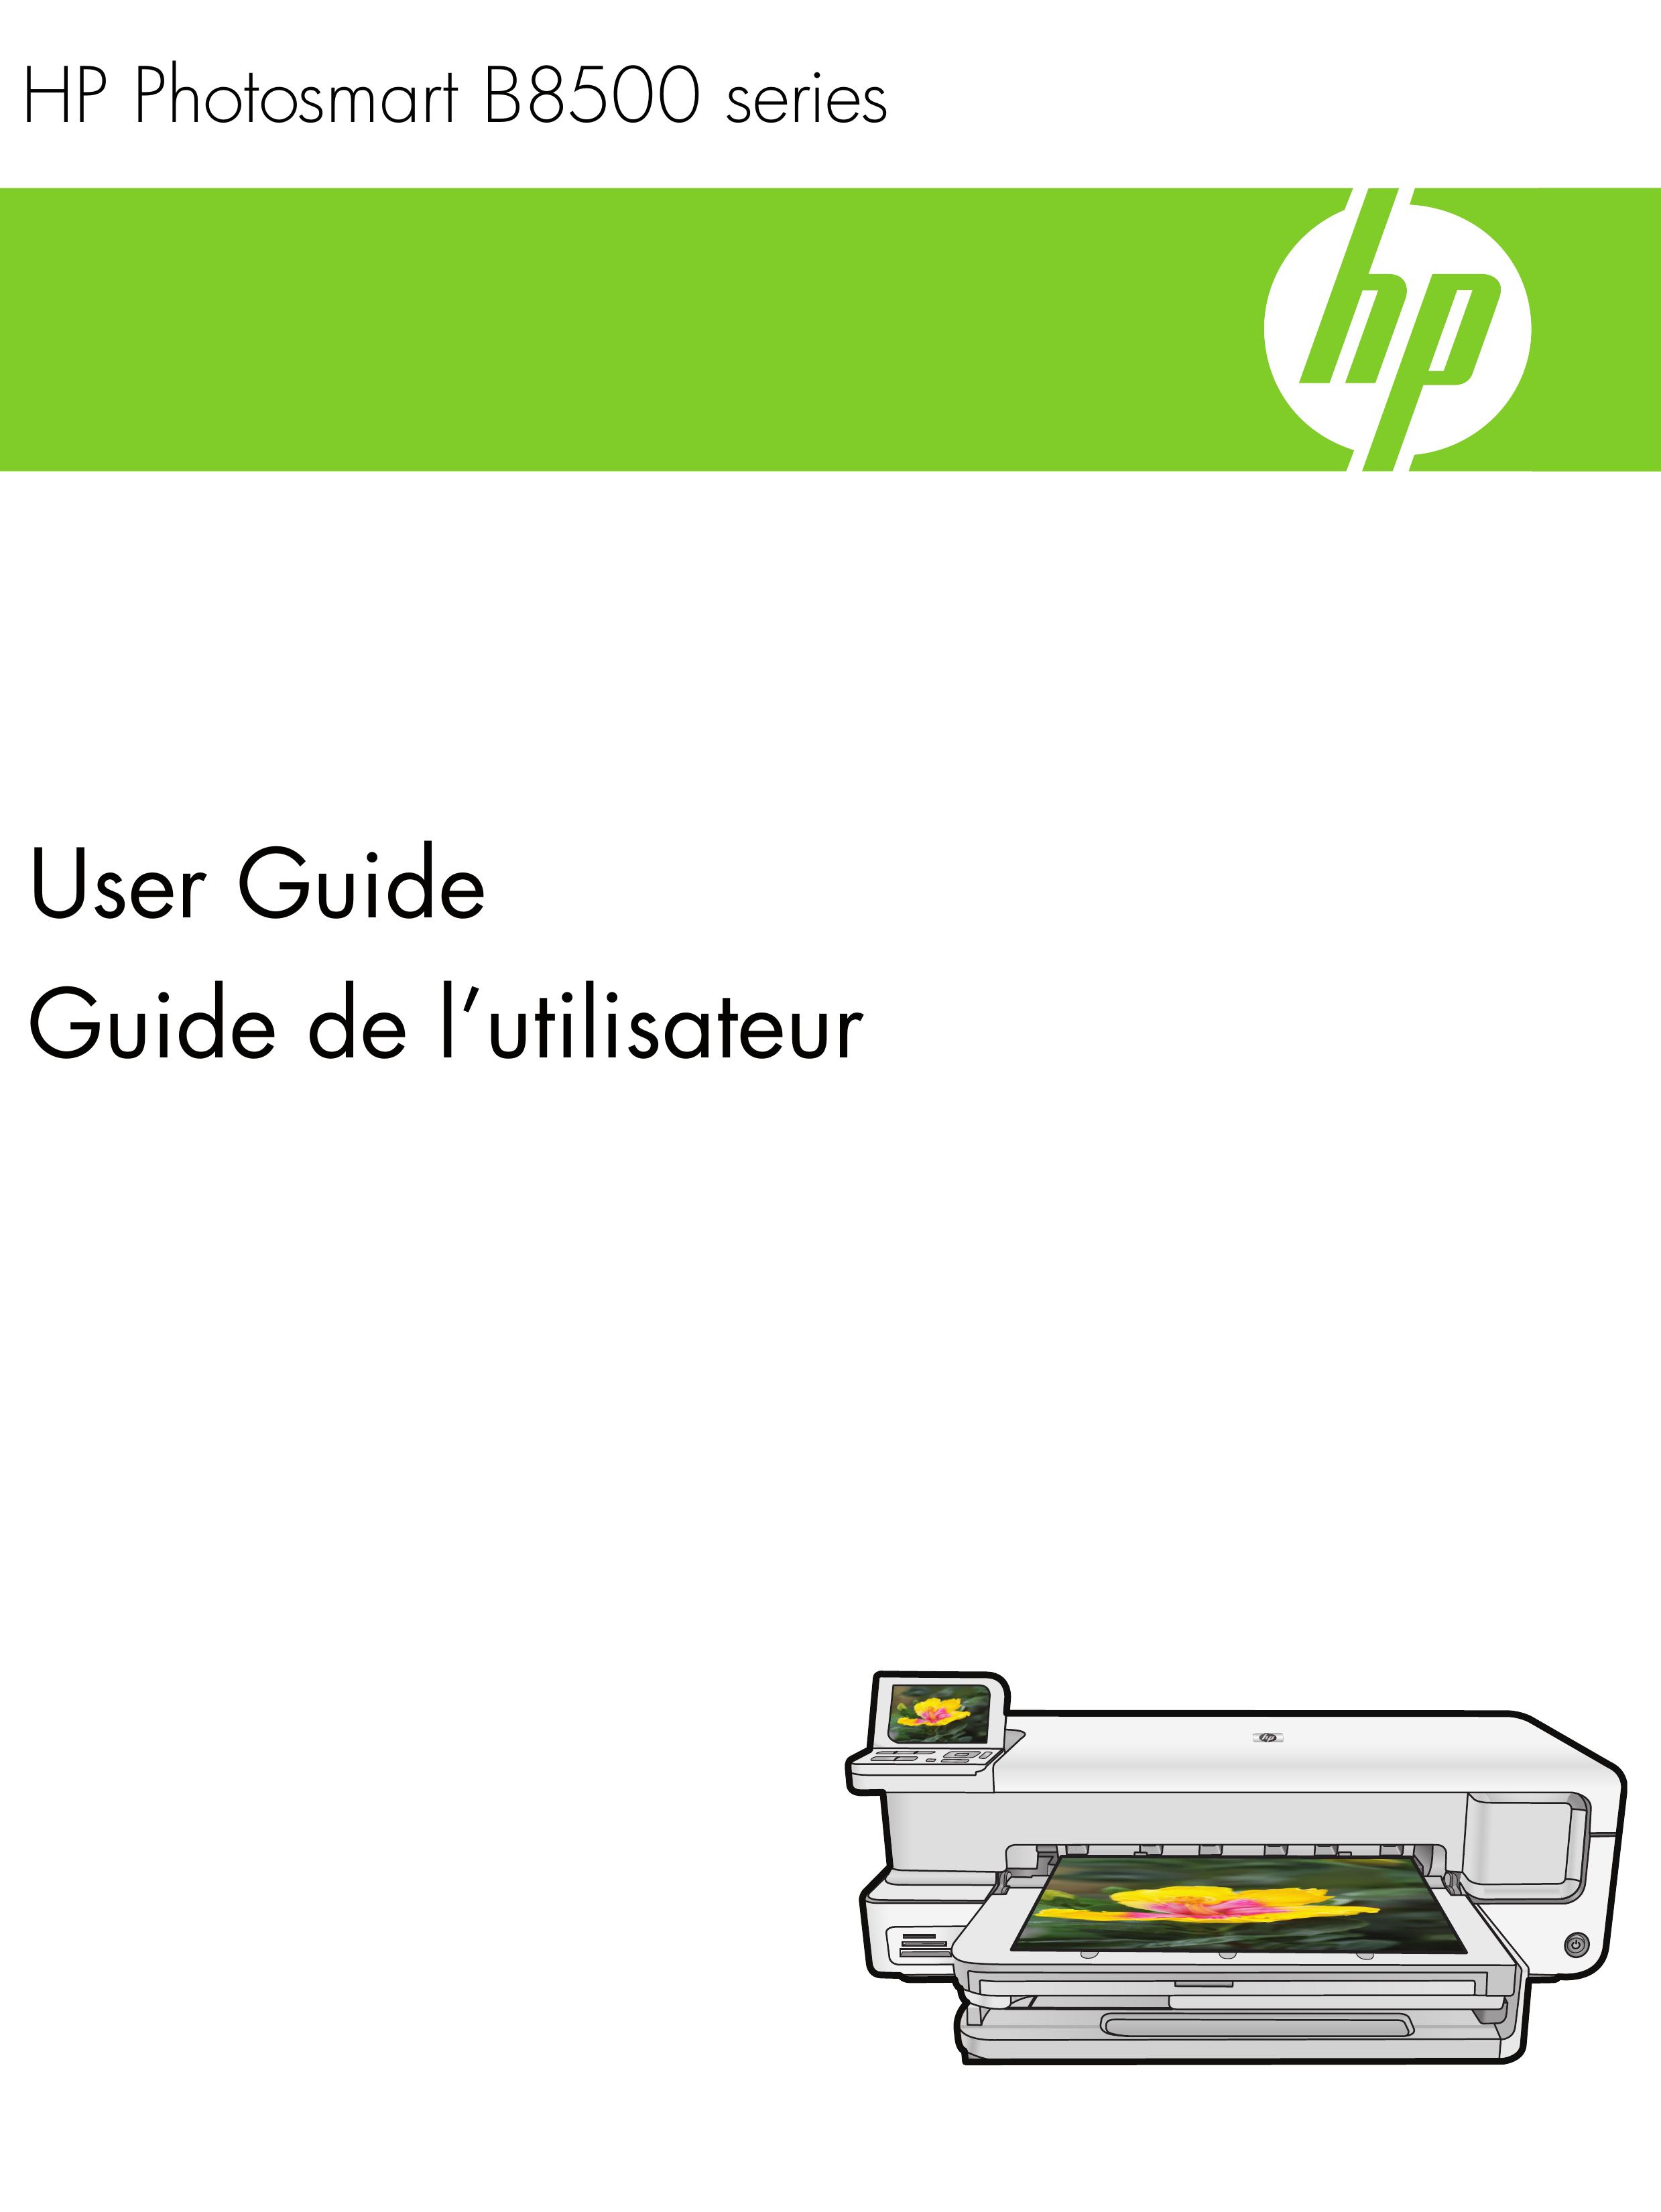 HP (Hewlett-Packard) B8550 Series Photo Printer User Manual